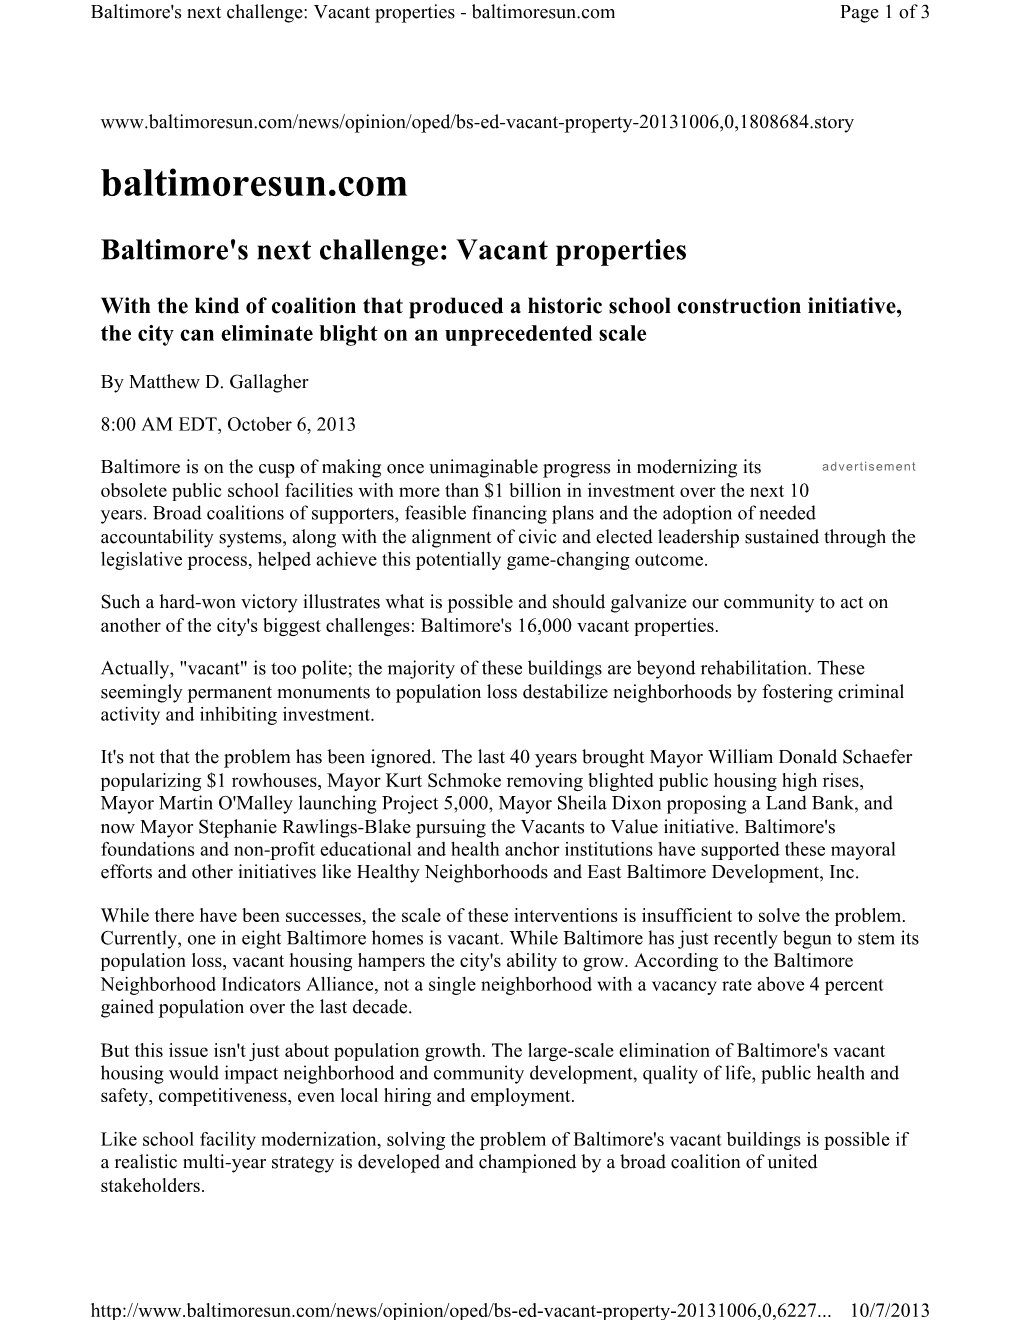 Vacant Properties - Baltimoresun.Com Page 1 of 3